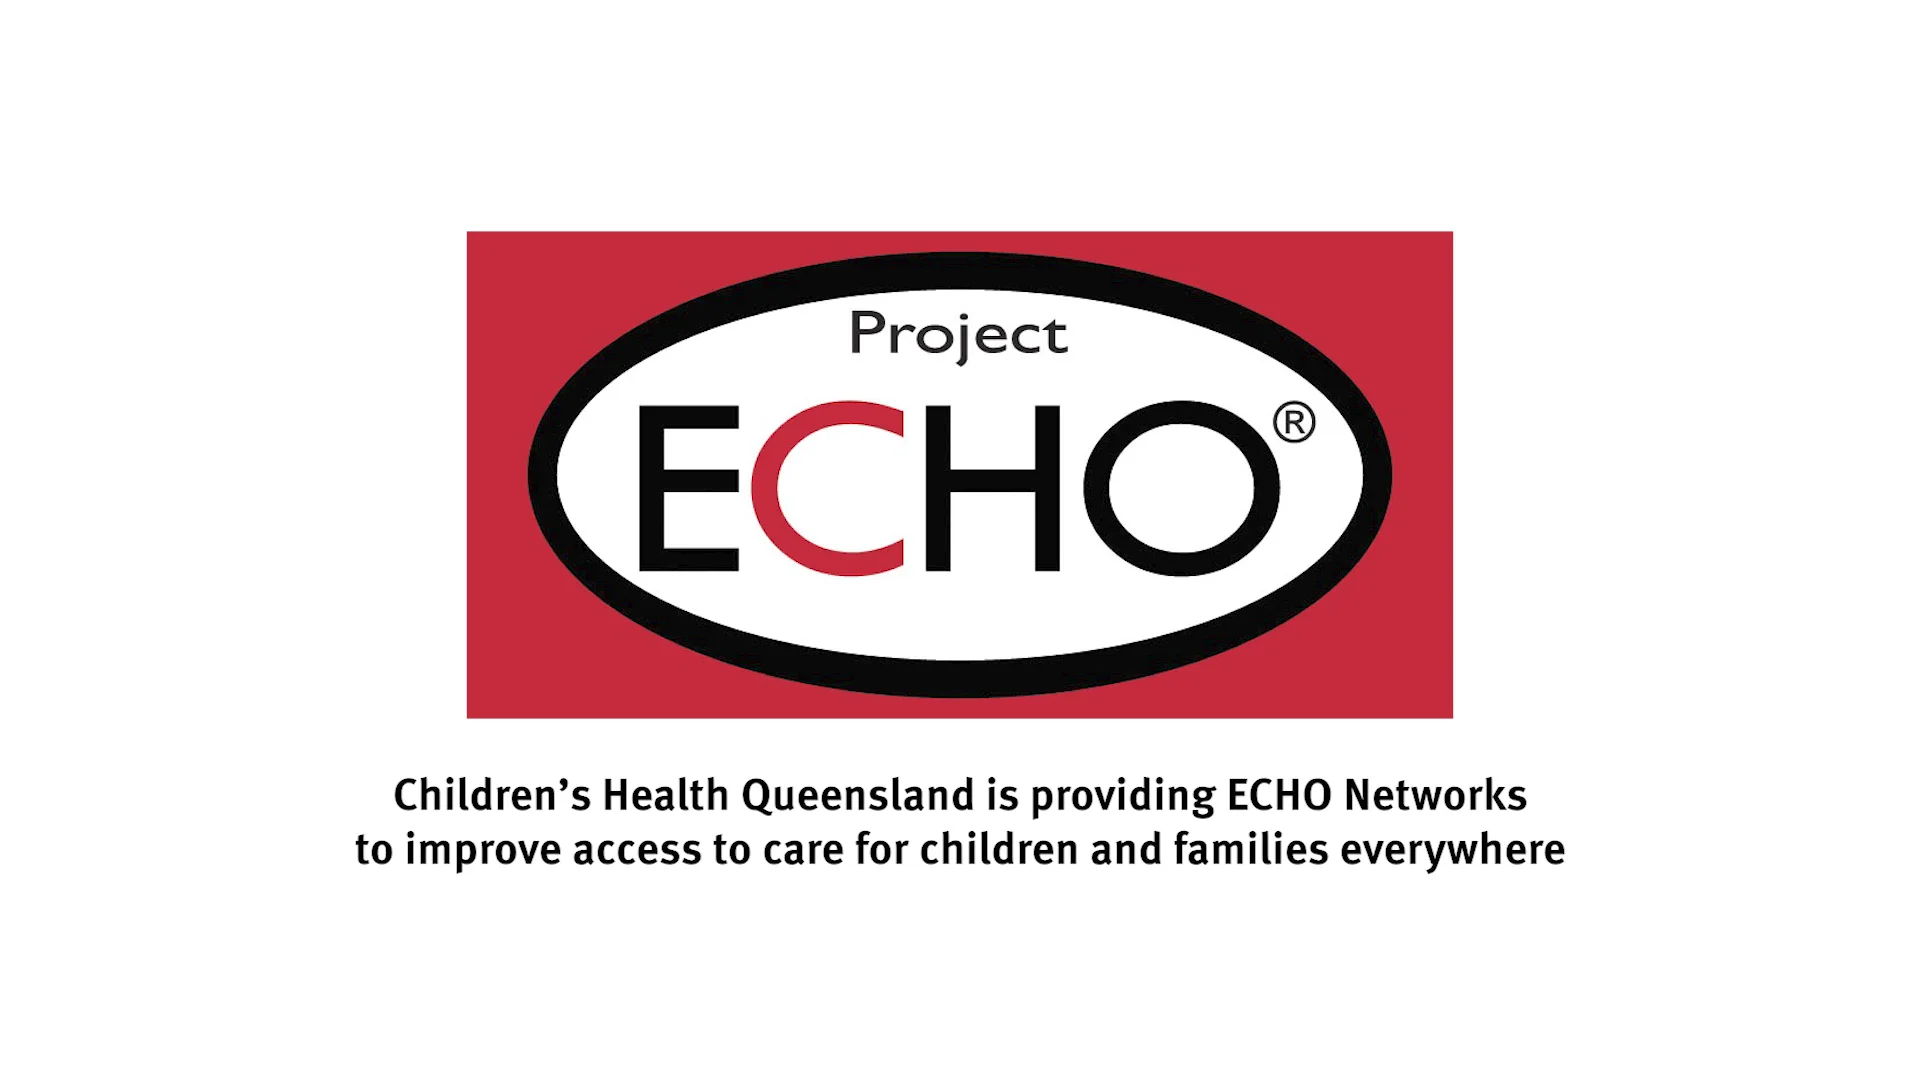 Project ECHO Video 1 on Vimeo